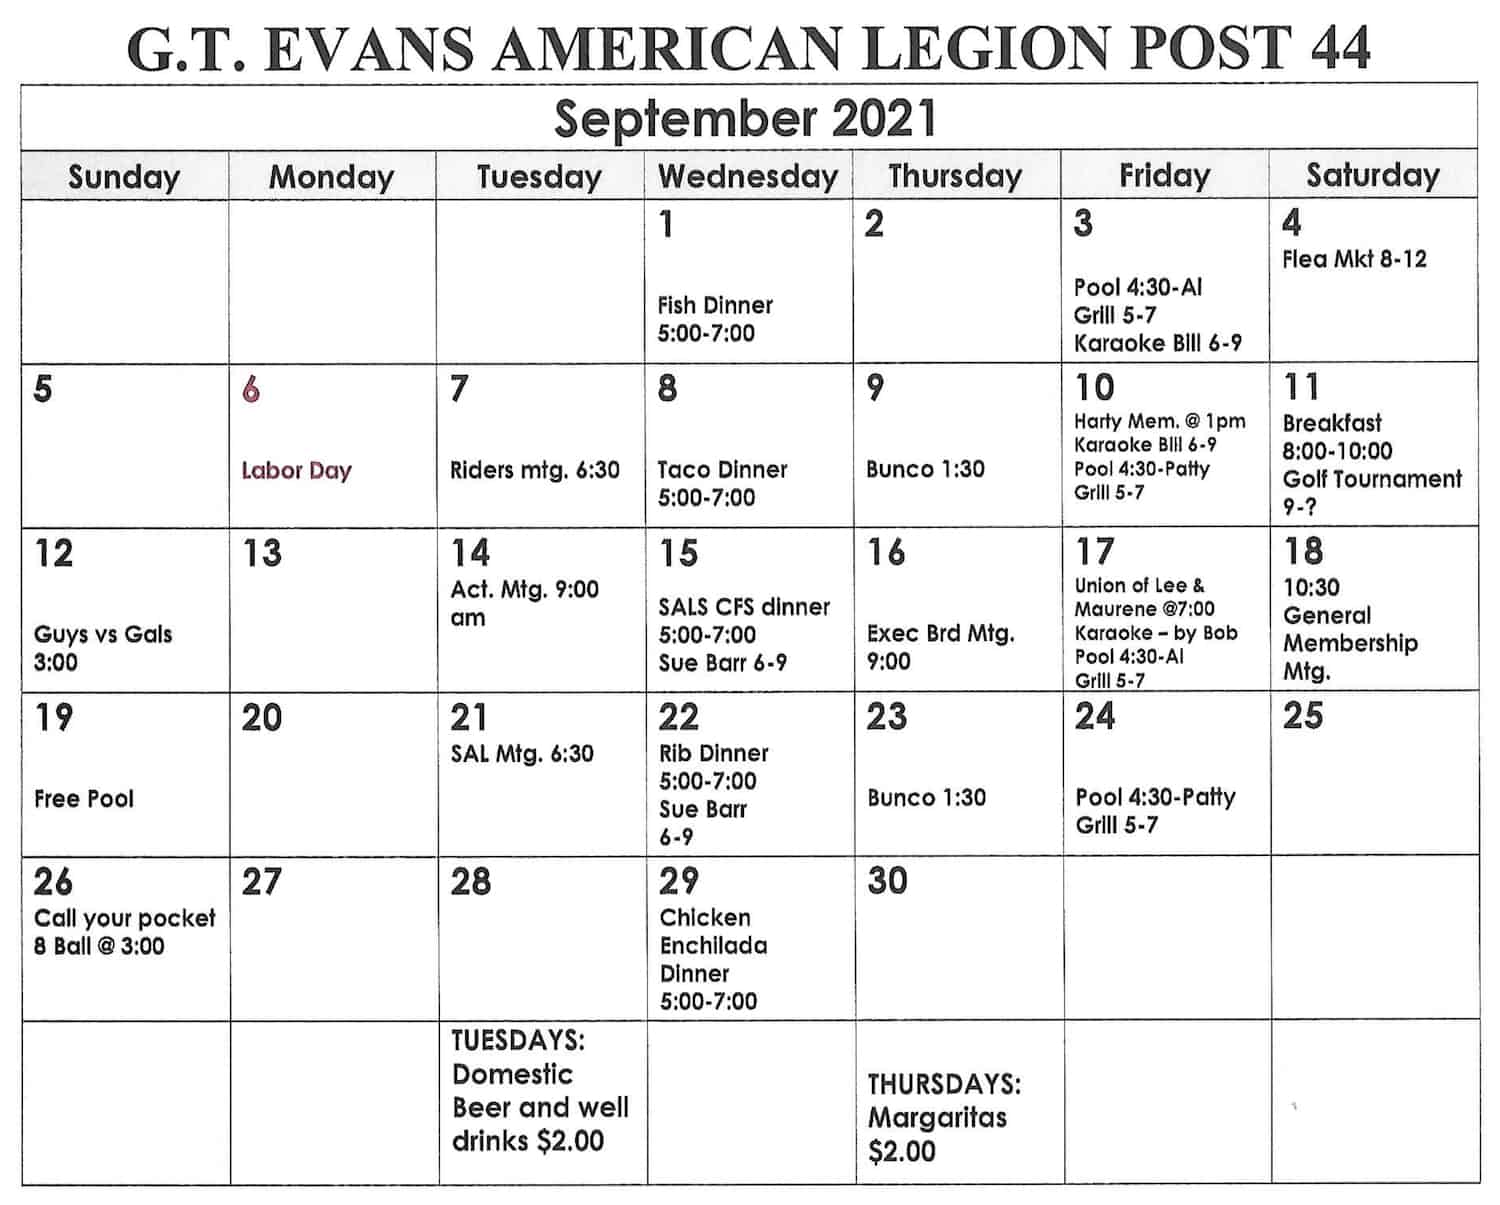 American Legion Post 44 Events Calendar G. T. Evans Post 44